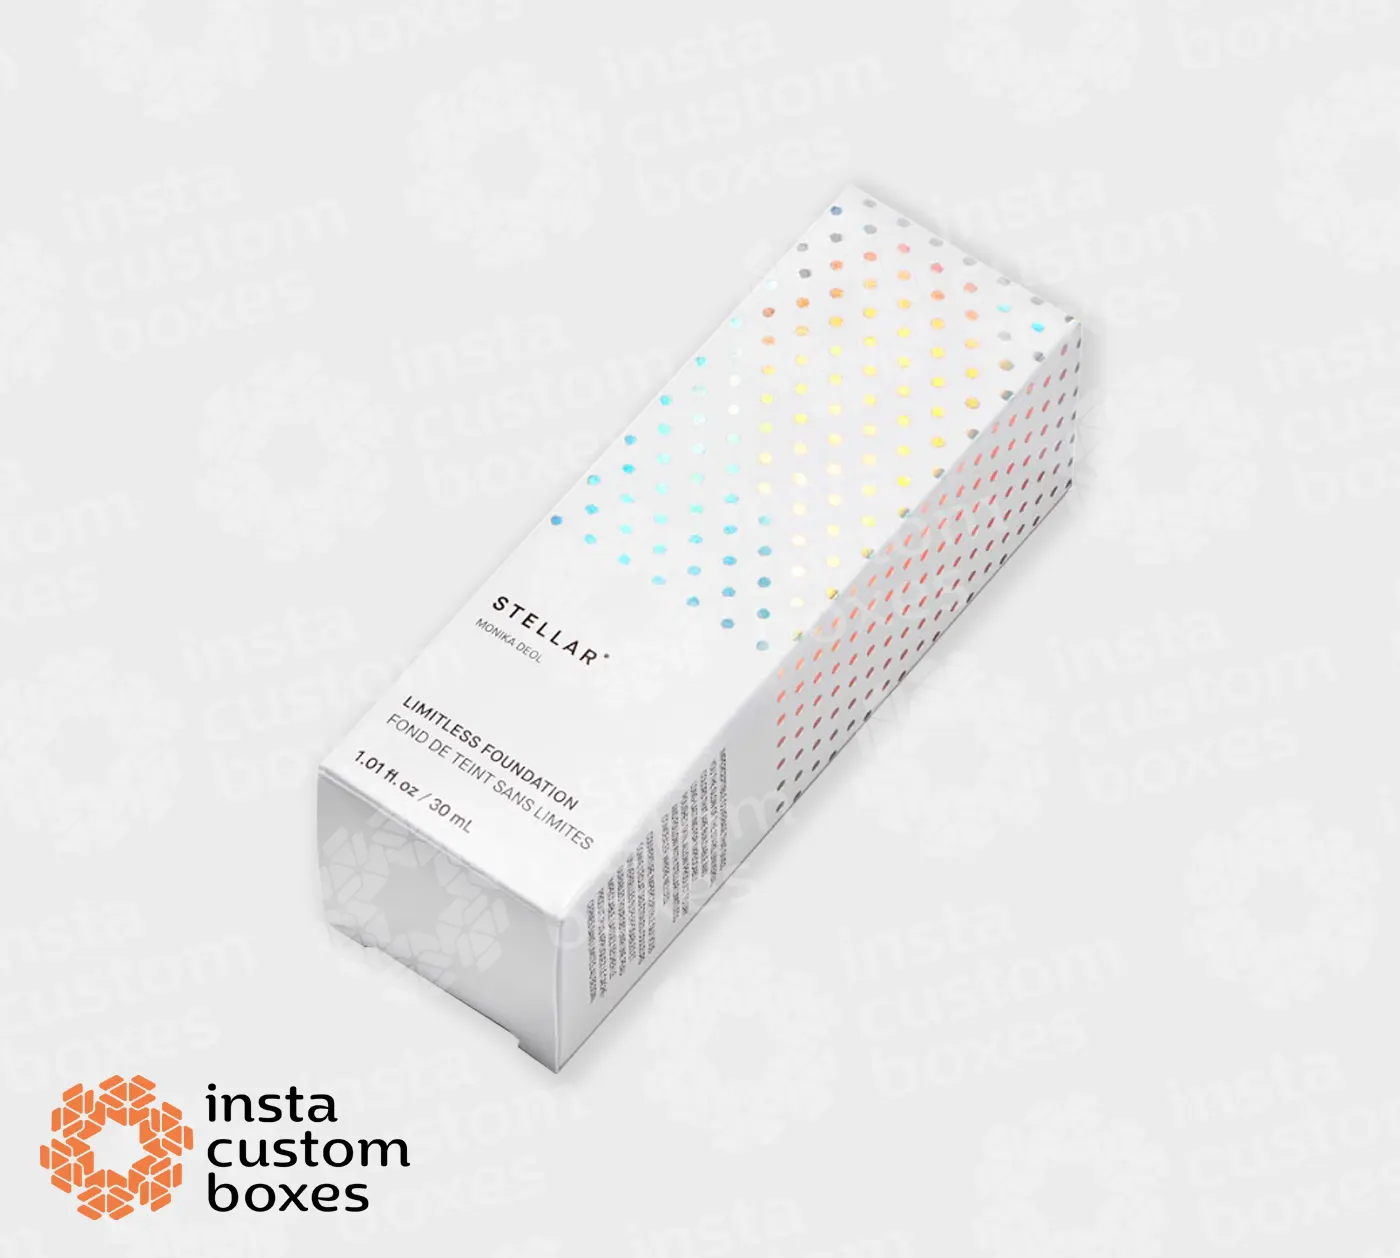 Foundation Boxes-Insta Custom Boxes 02.webp